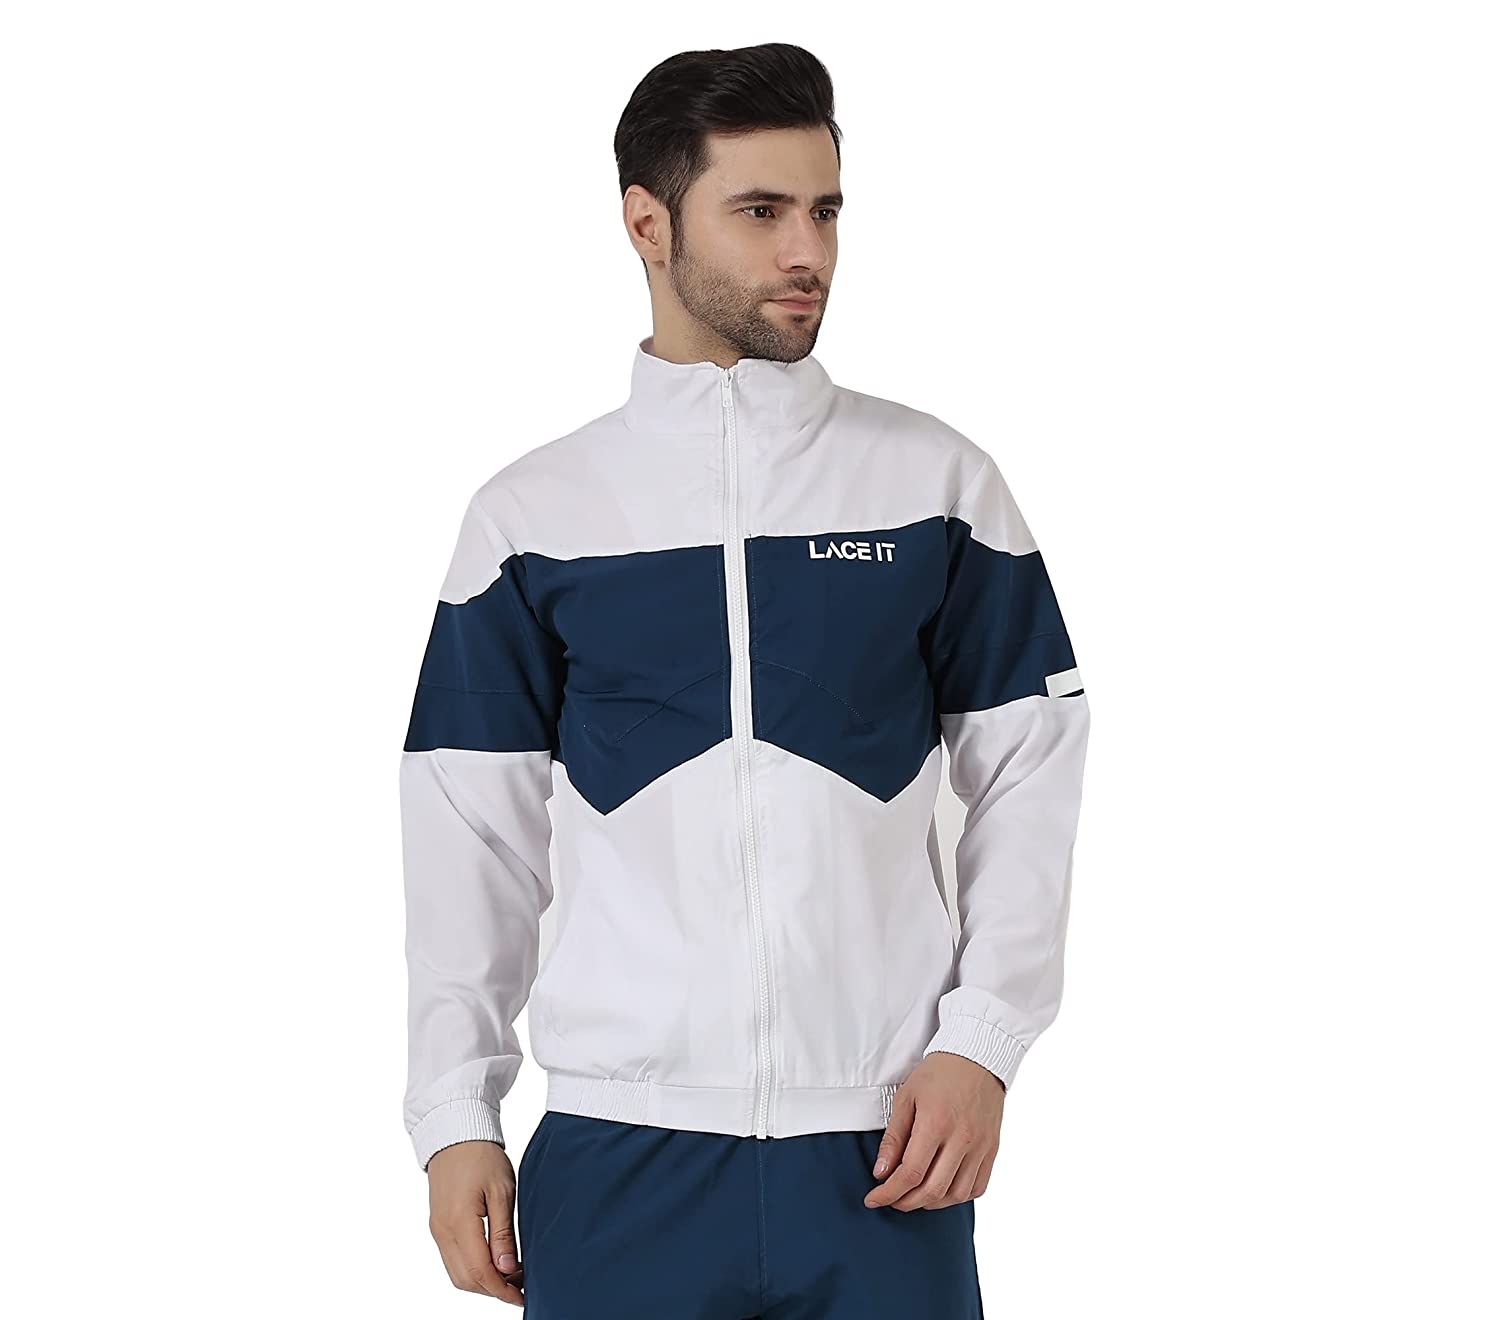 LACE IT |  White Men's Lycra Jacket Full Sleeve with zipper pockets